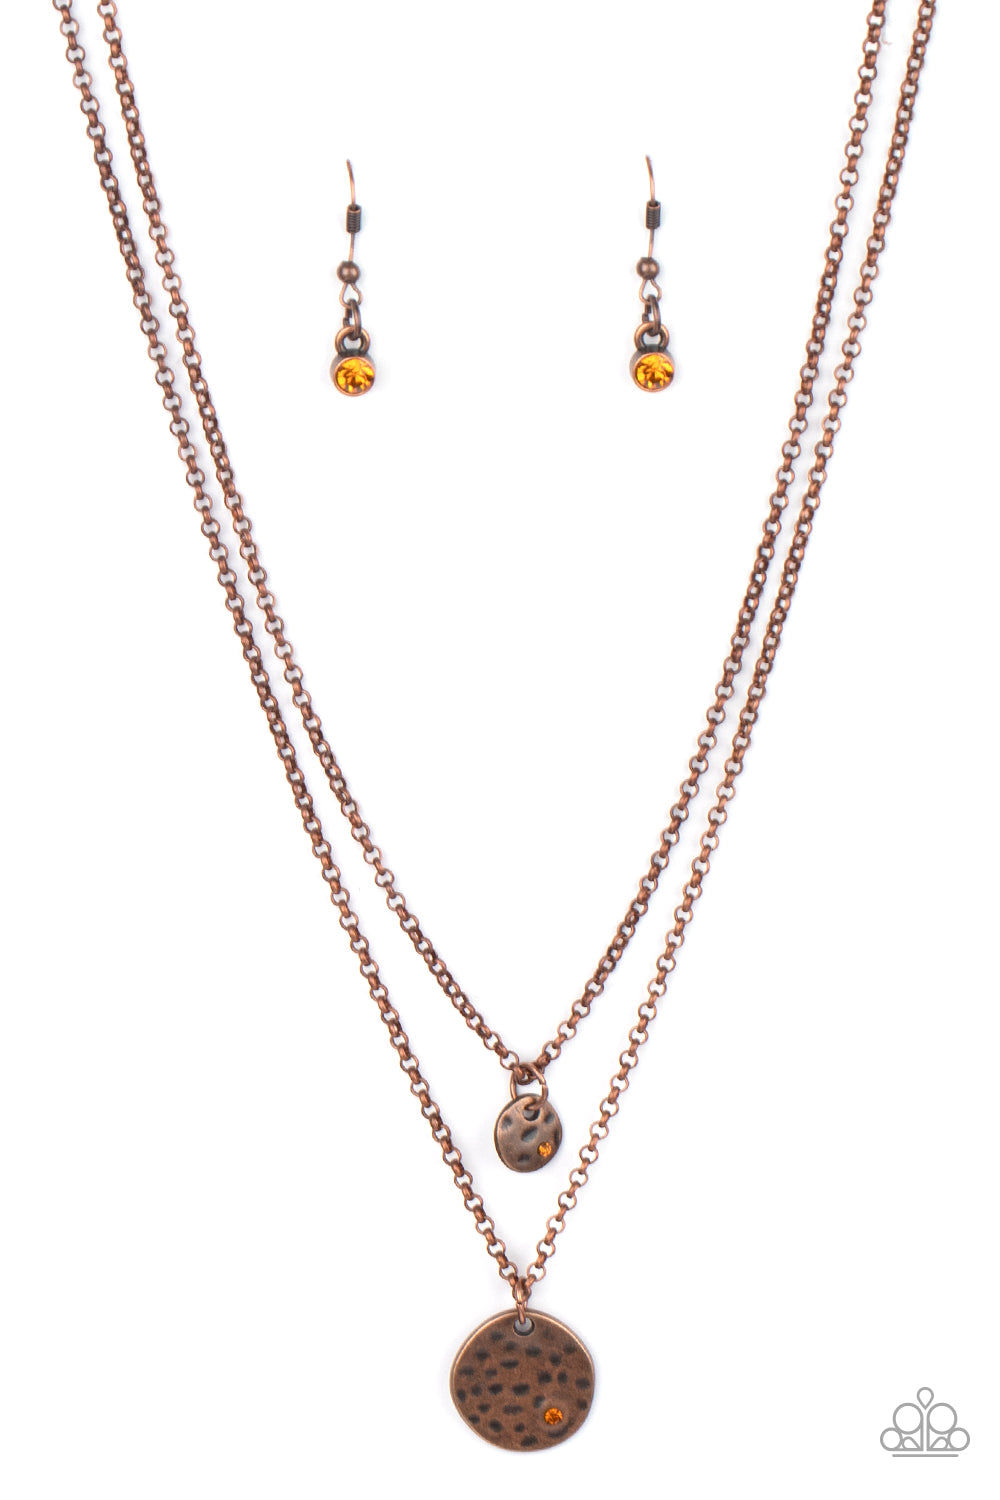 Modern Minimalist - Copper Necklace freeshipping - JewLz4u Gemstone Gallery